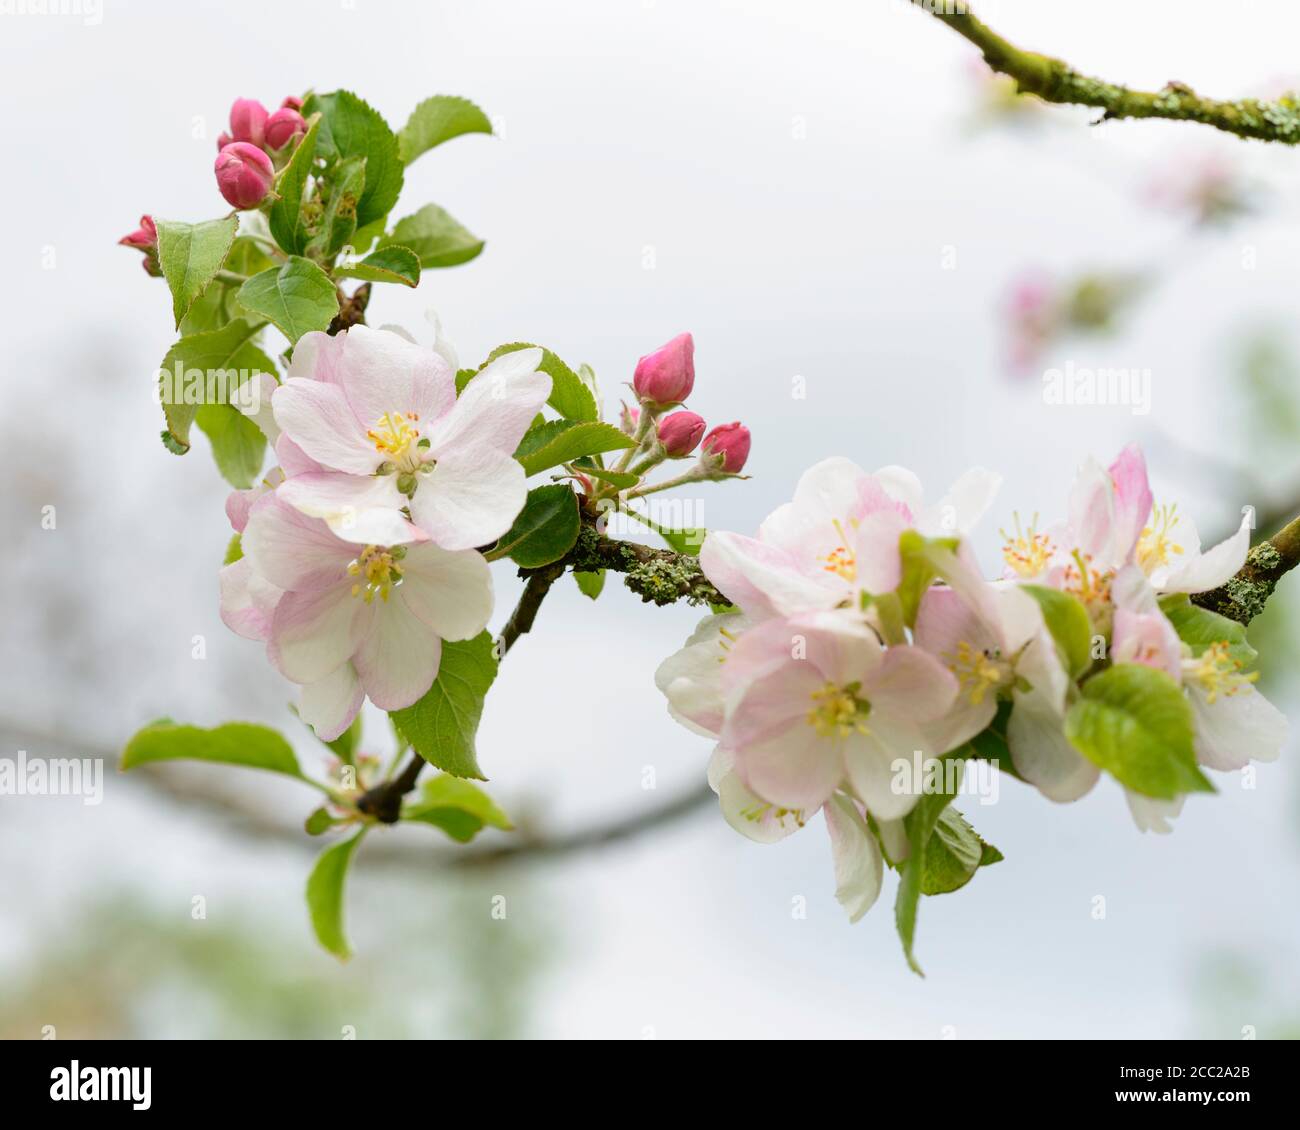 Netherlands, Apple blossom, close-up Stock Photo